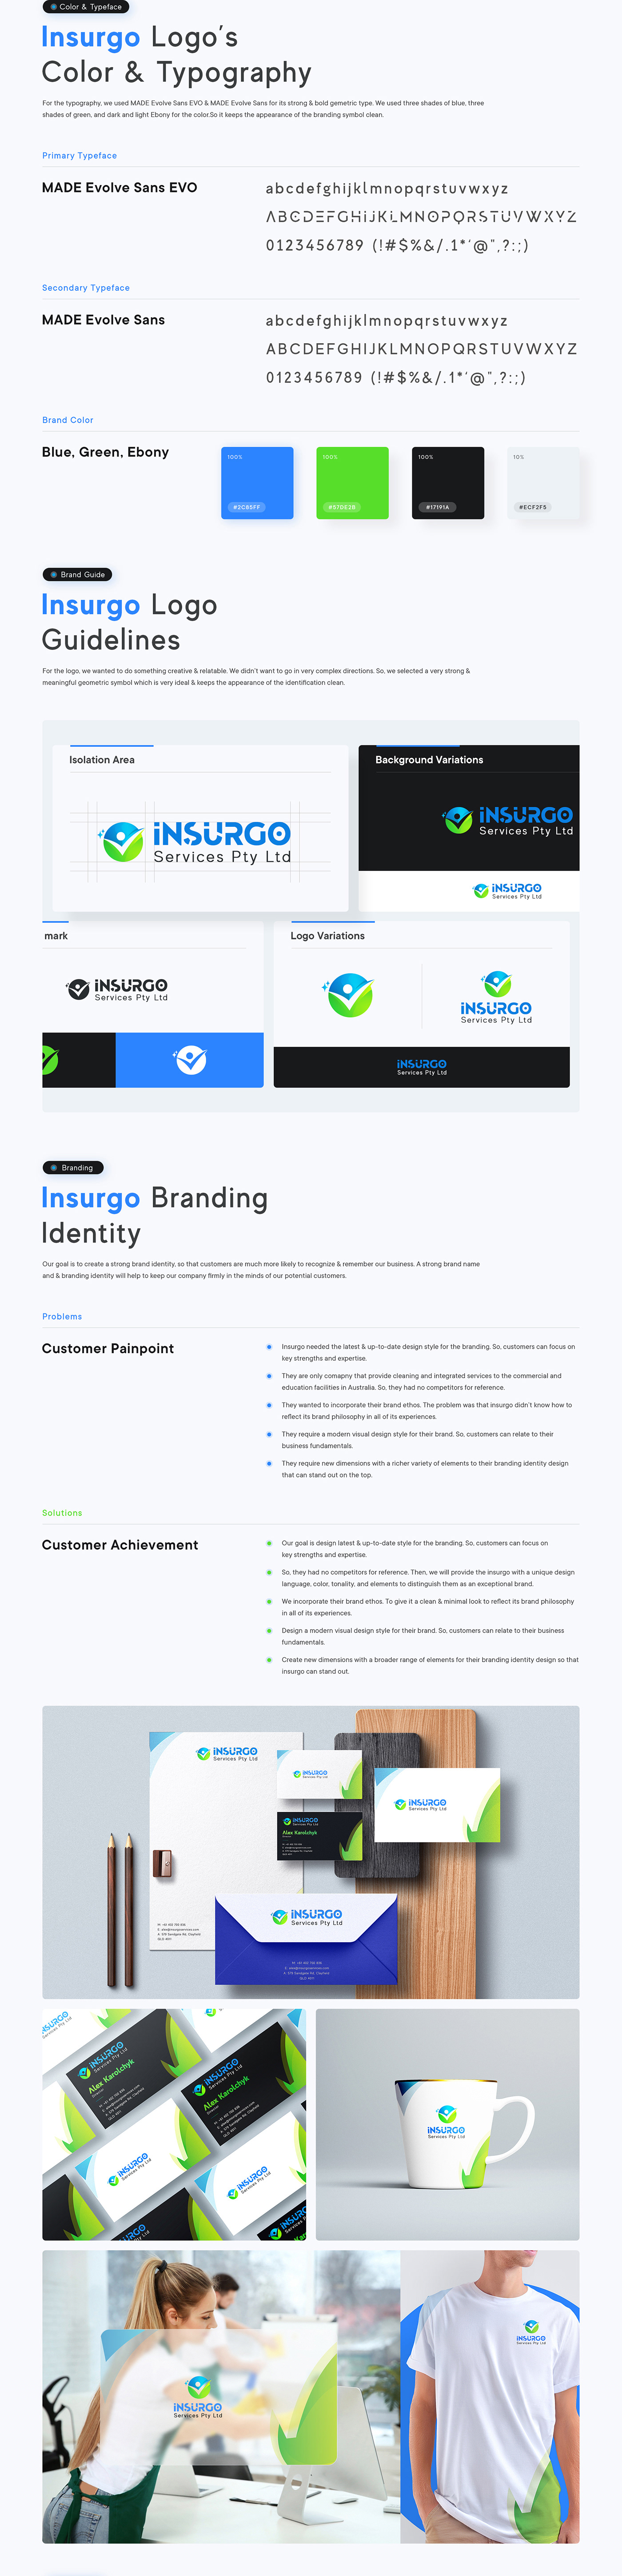 brand brandguide branding  Case Study creative csae study UI ux Website